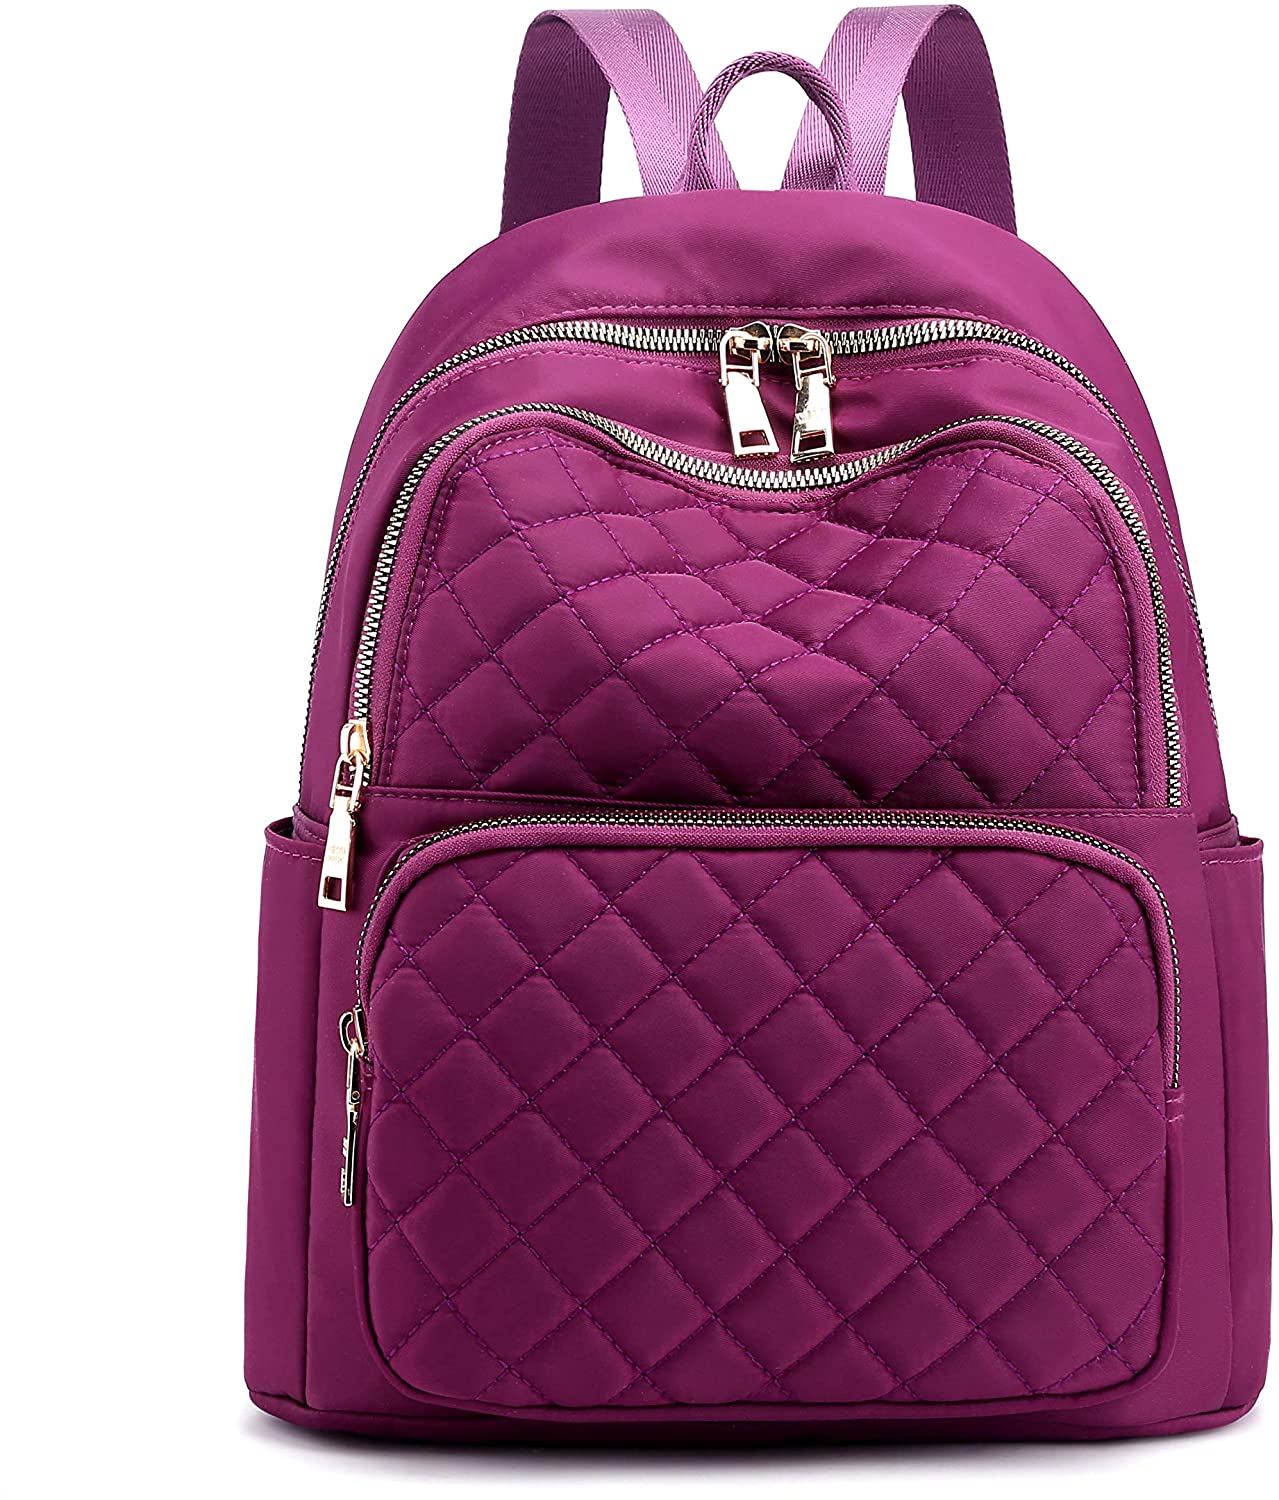 Color : Red, Size : 211227cm KJVHJN Nylon Womens Backpack Soft Face Solid Color Sewing Line Fashion Backpack Simple Pop Handbag College School Bag